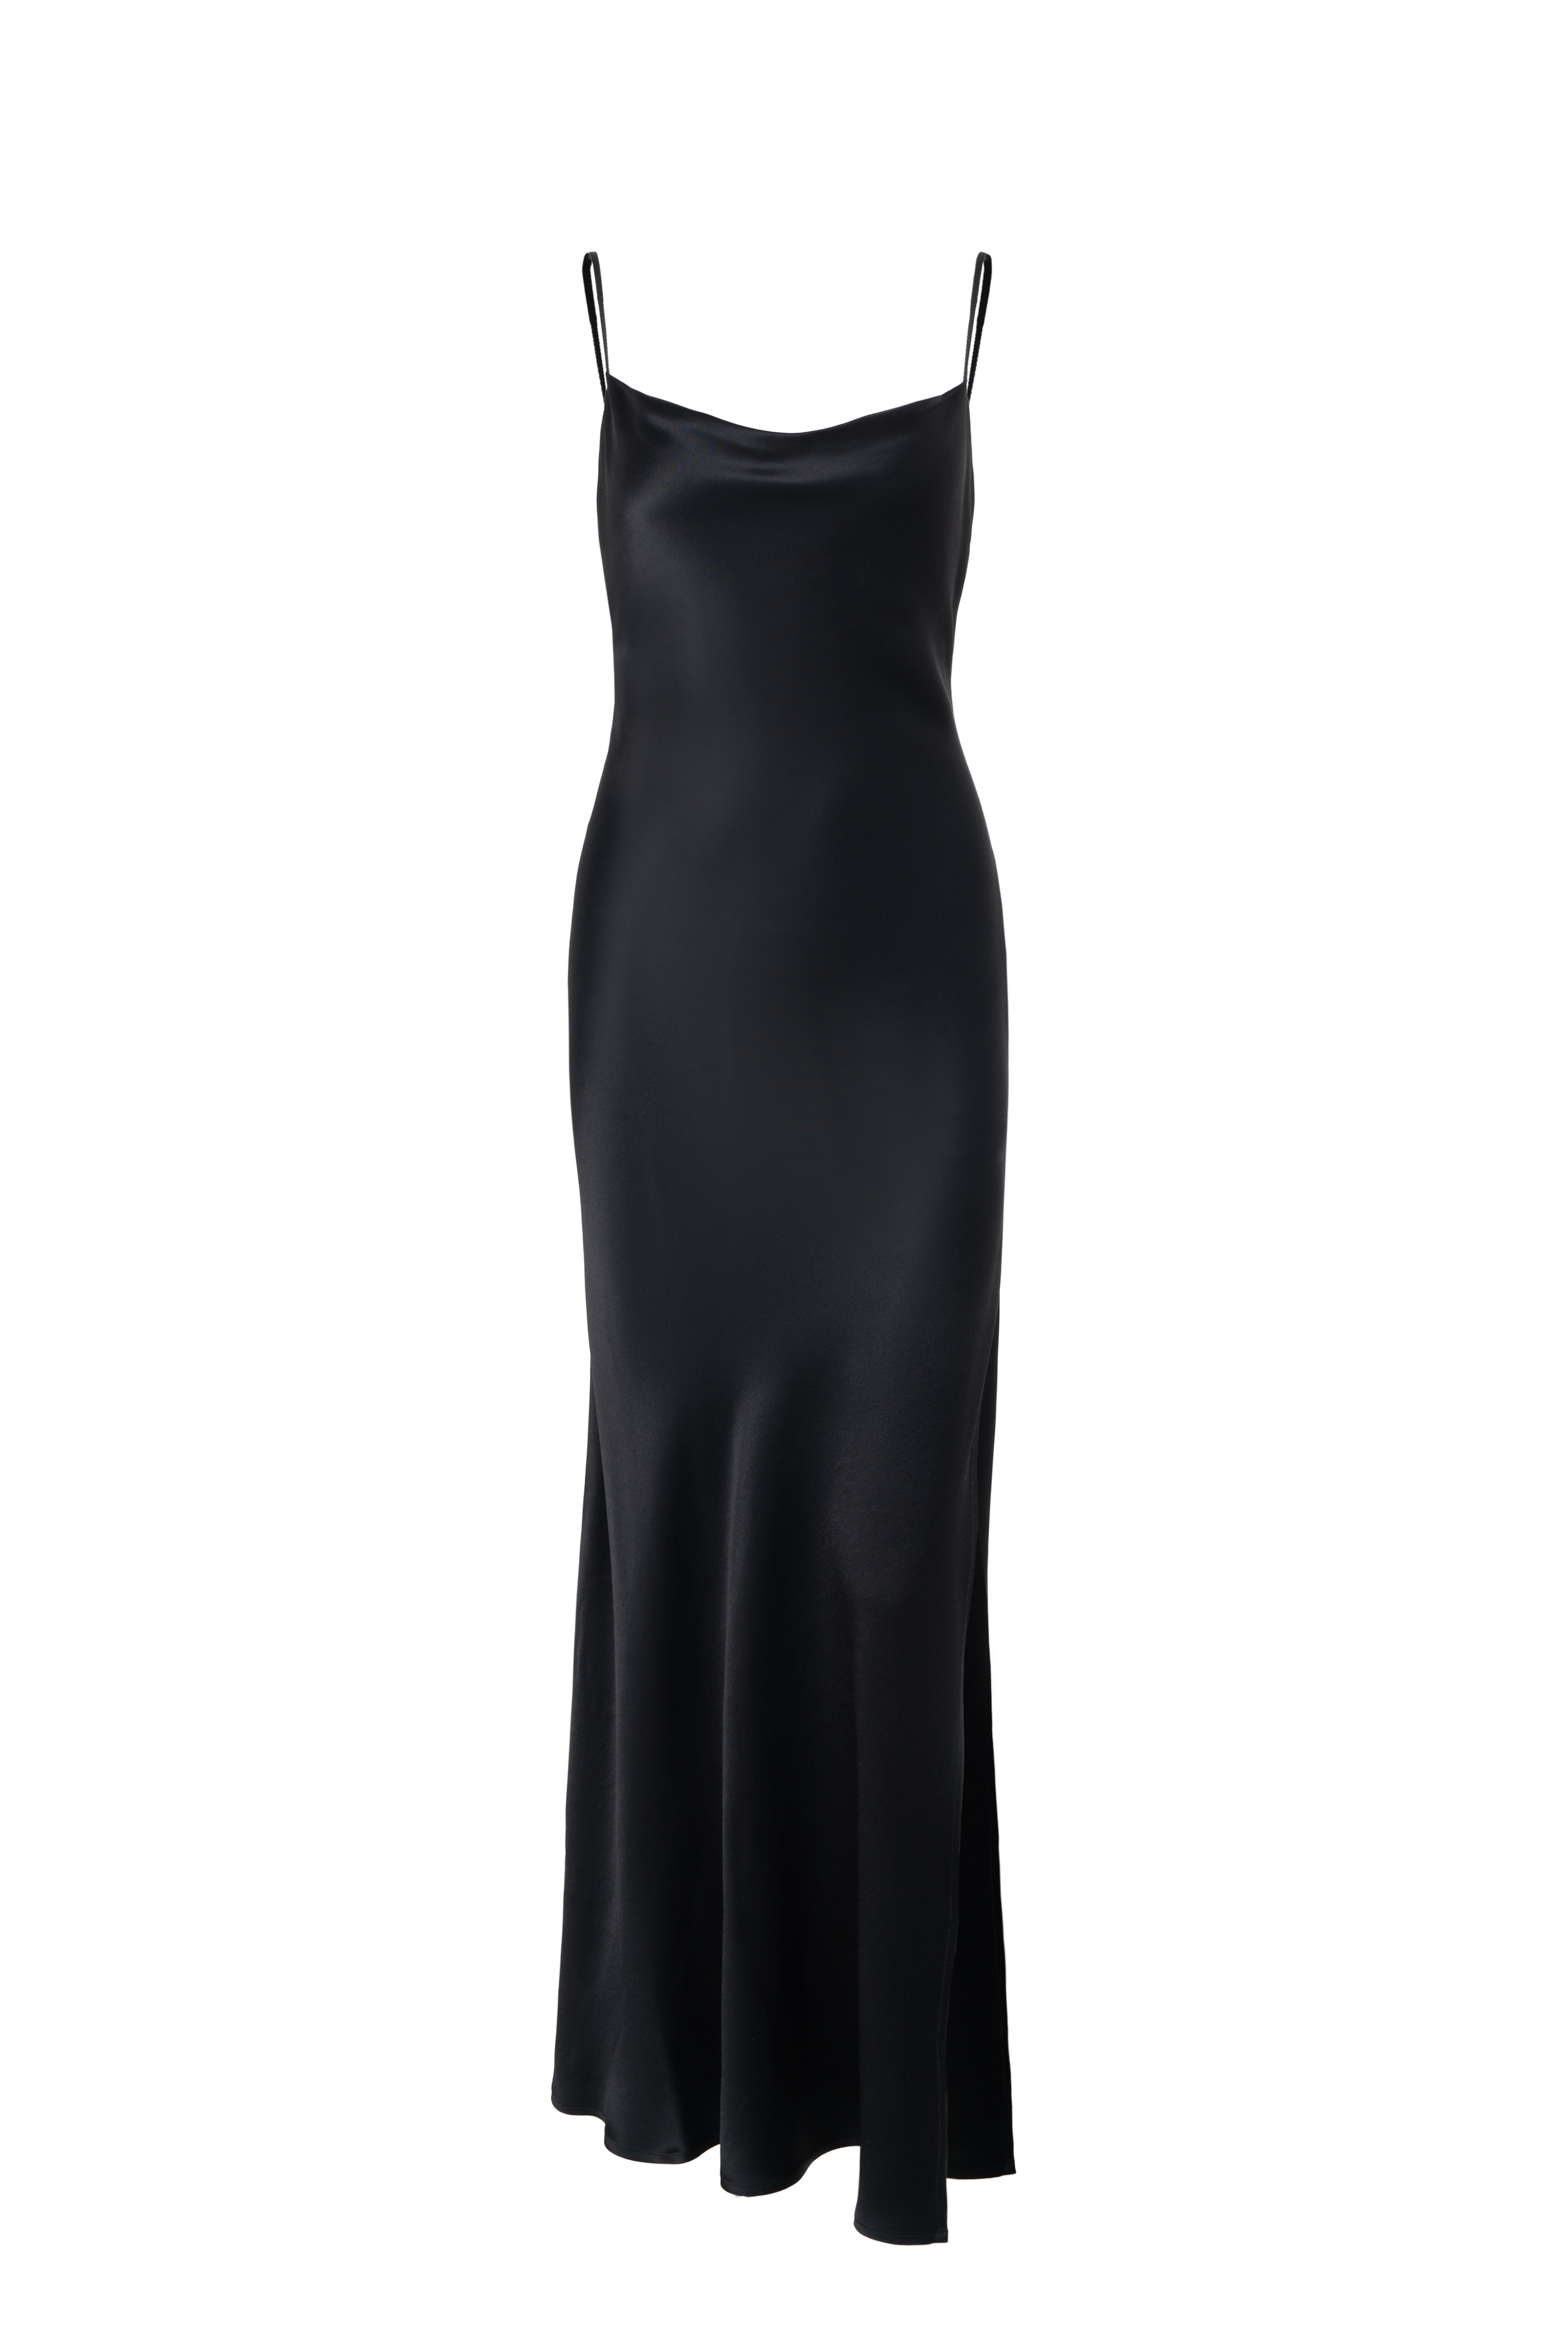 Dress 5016-01 Black from BRUSNiKA